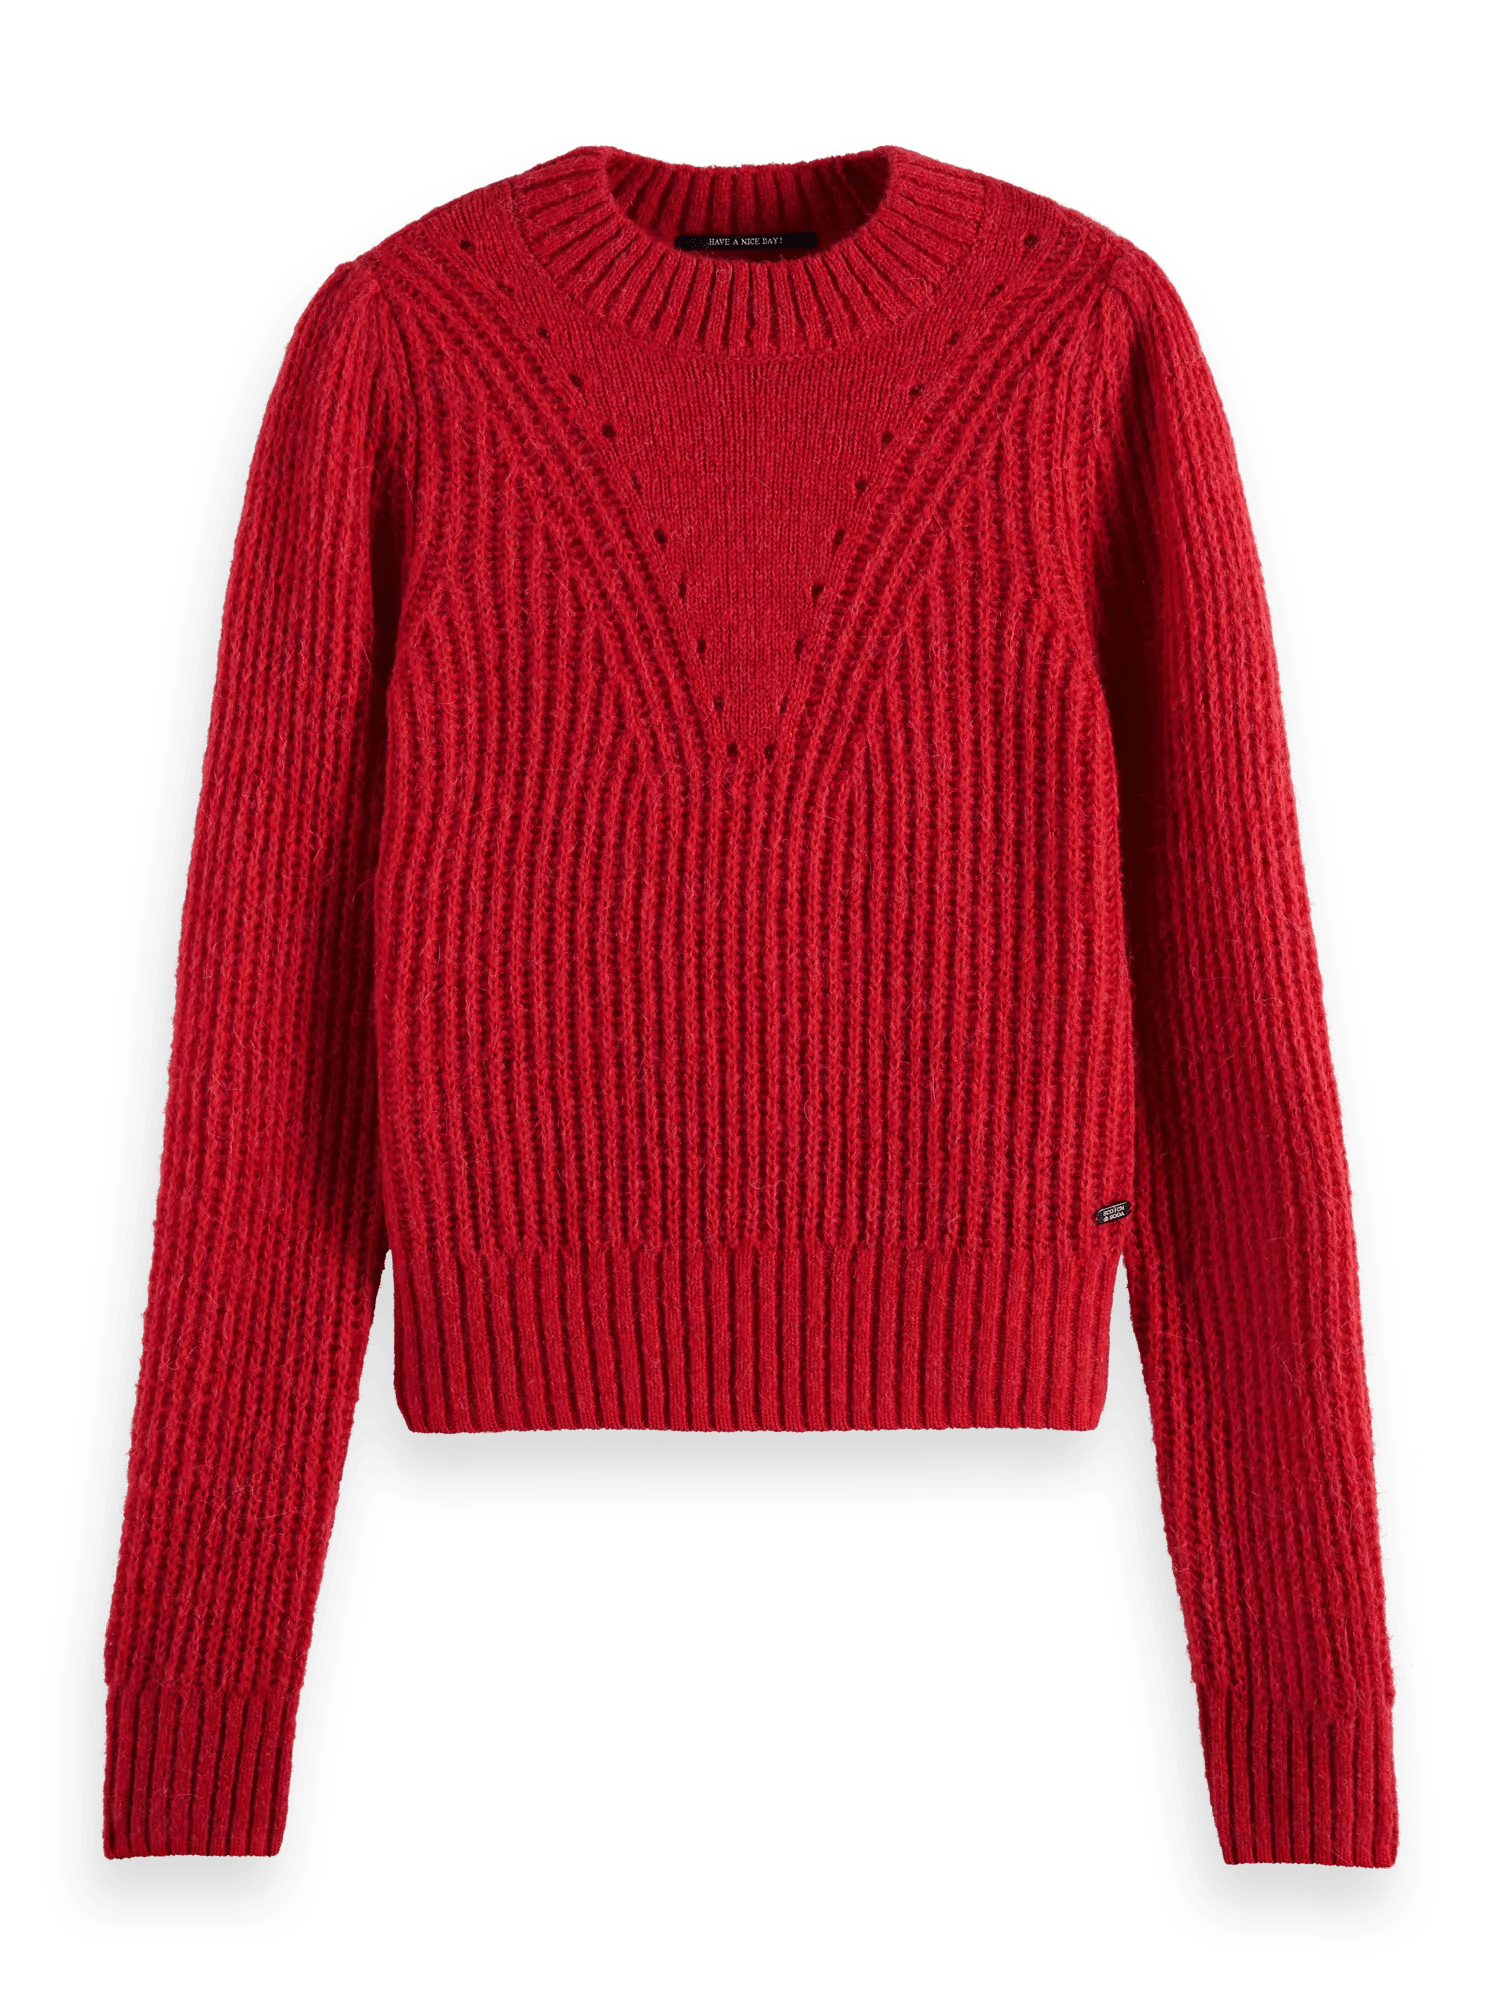 Scotch & Soda Fuzzy knitted puffy sleeve sweater FNT